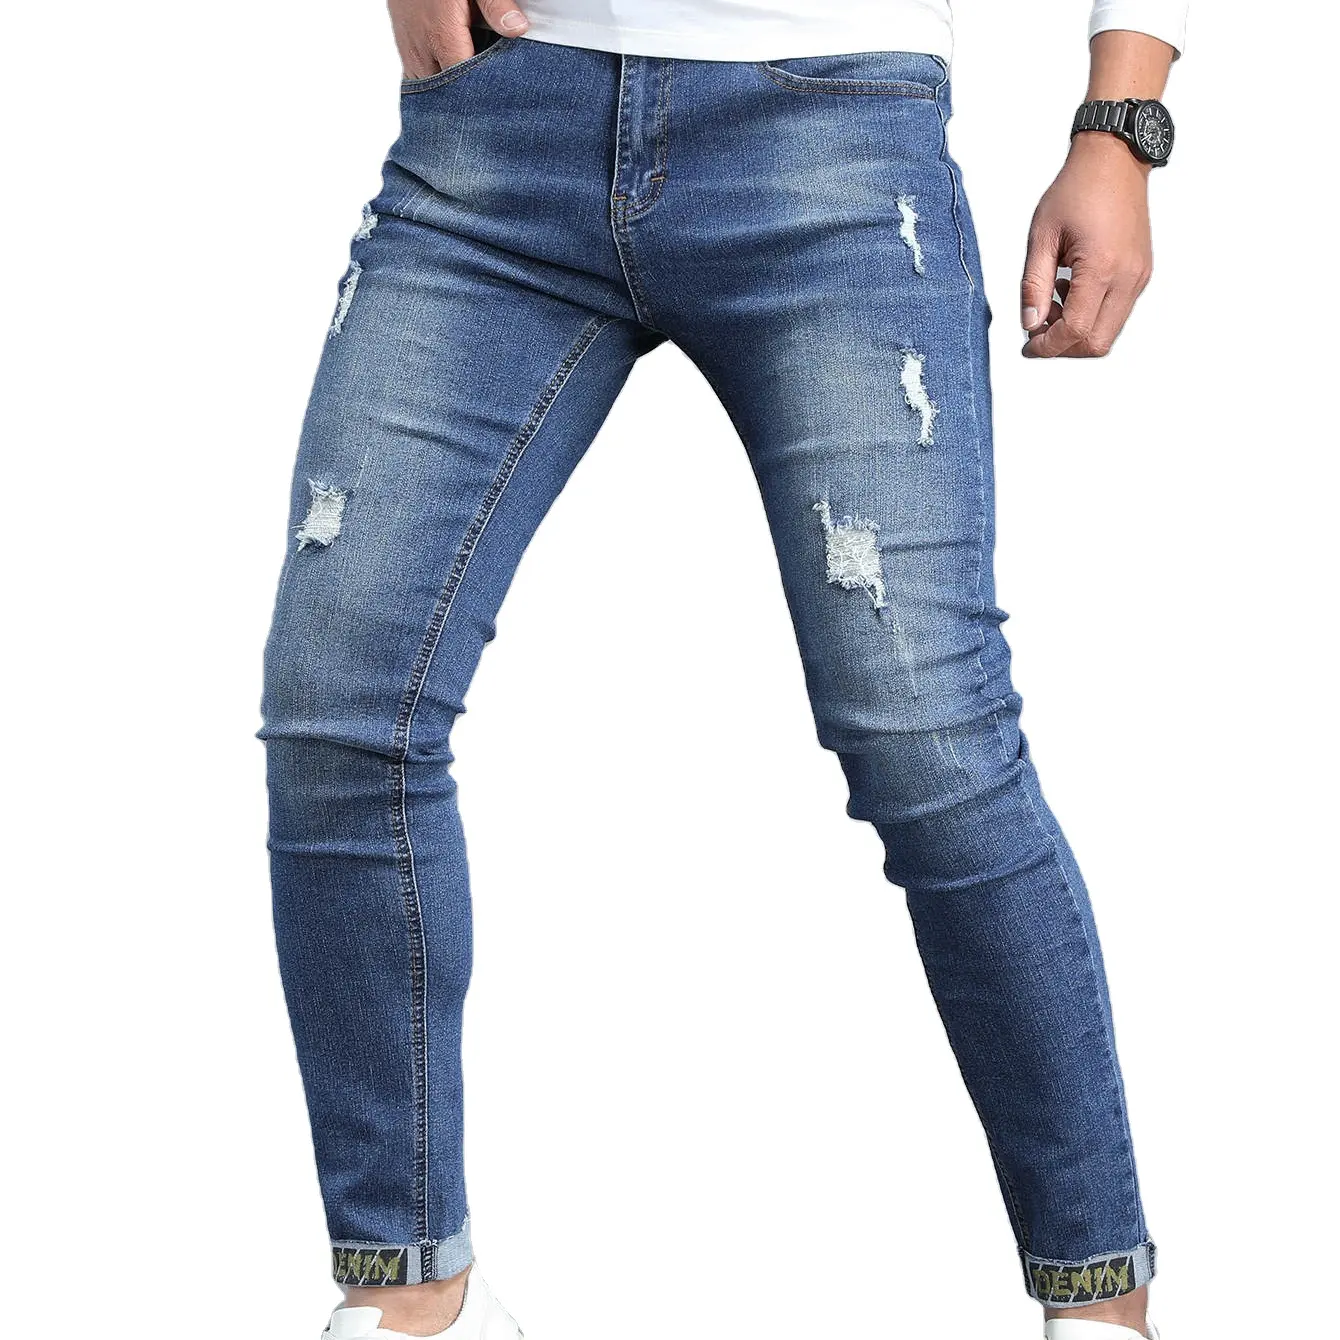 Denim Jeans Pencil Pants Fully Starch Fabric Wholesale Men's Popular Fashion Slim Smart Casual Original denim pants for men